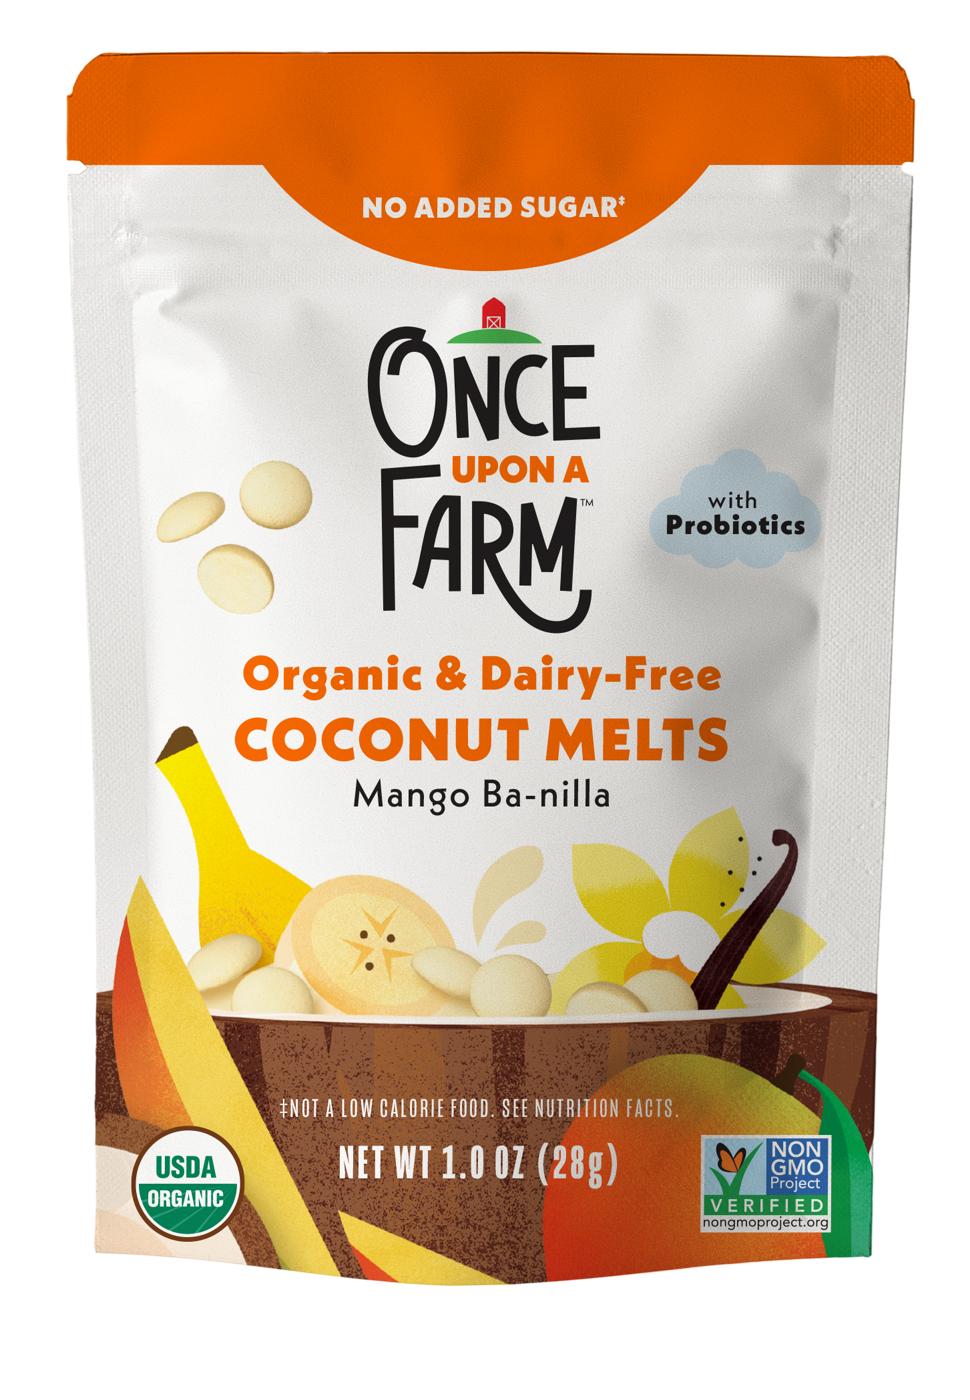 Once Upon a Farm Organic & Dairy-Free Coconut Melts -  Mango Ba-nilla; image 1 of 2